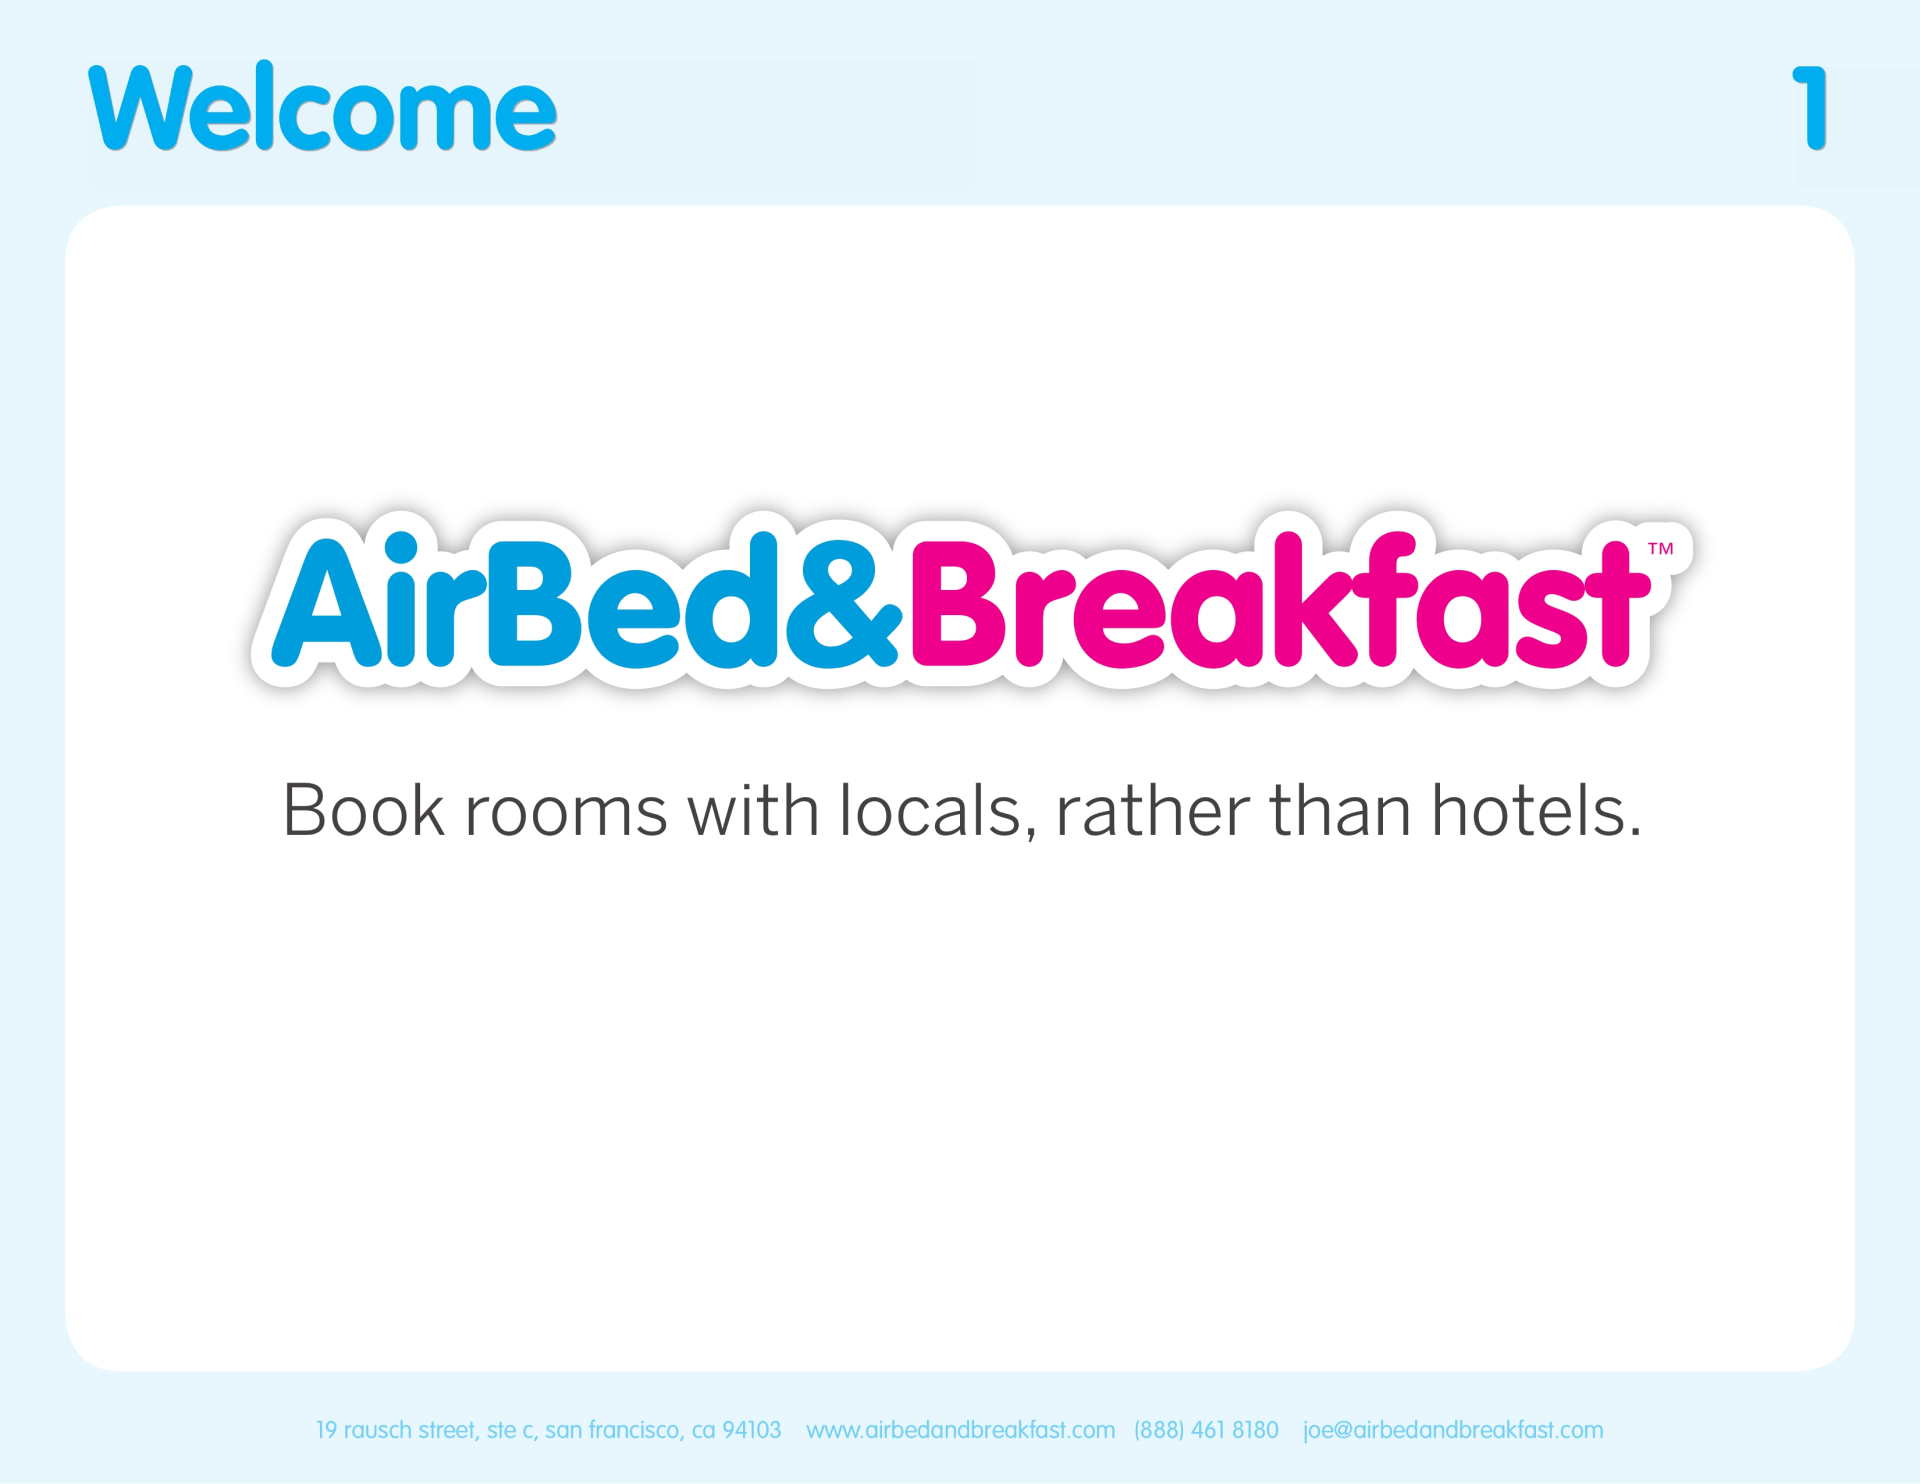 Первый слайд из презентации Airbnb 2009 года. Надпись: “AirBed & Breakfast. Book rooms with locals, rather than hotels.